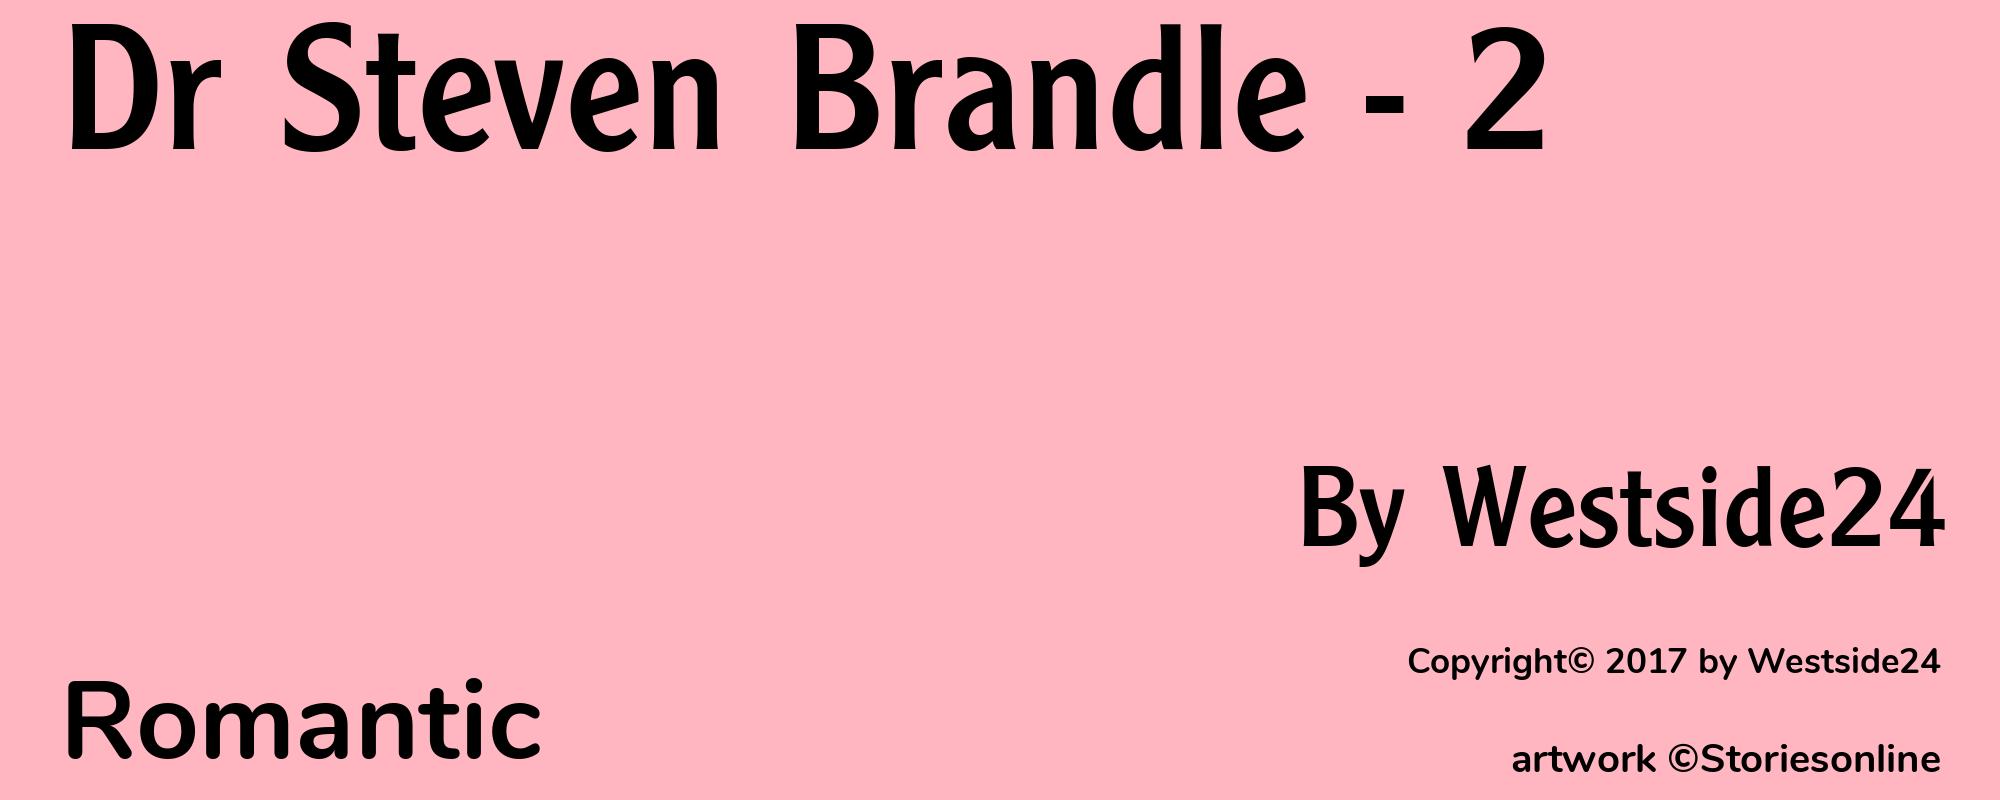 Dr Steven Brandle - 2 - Cover